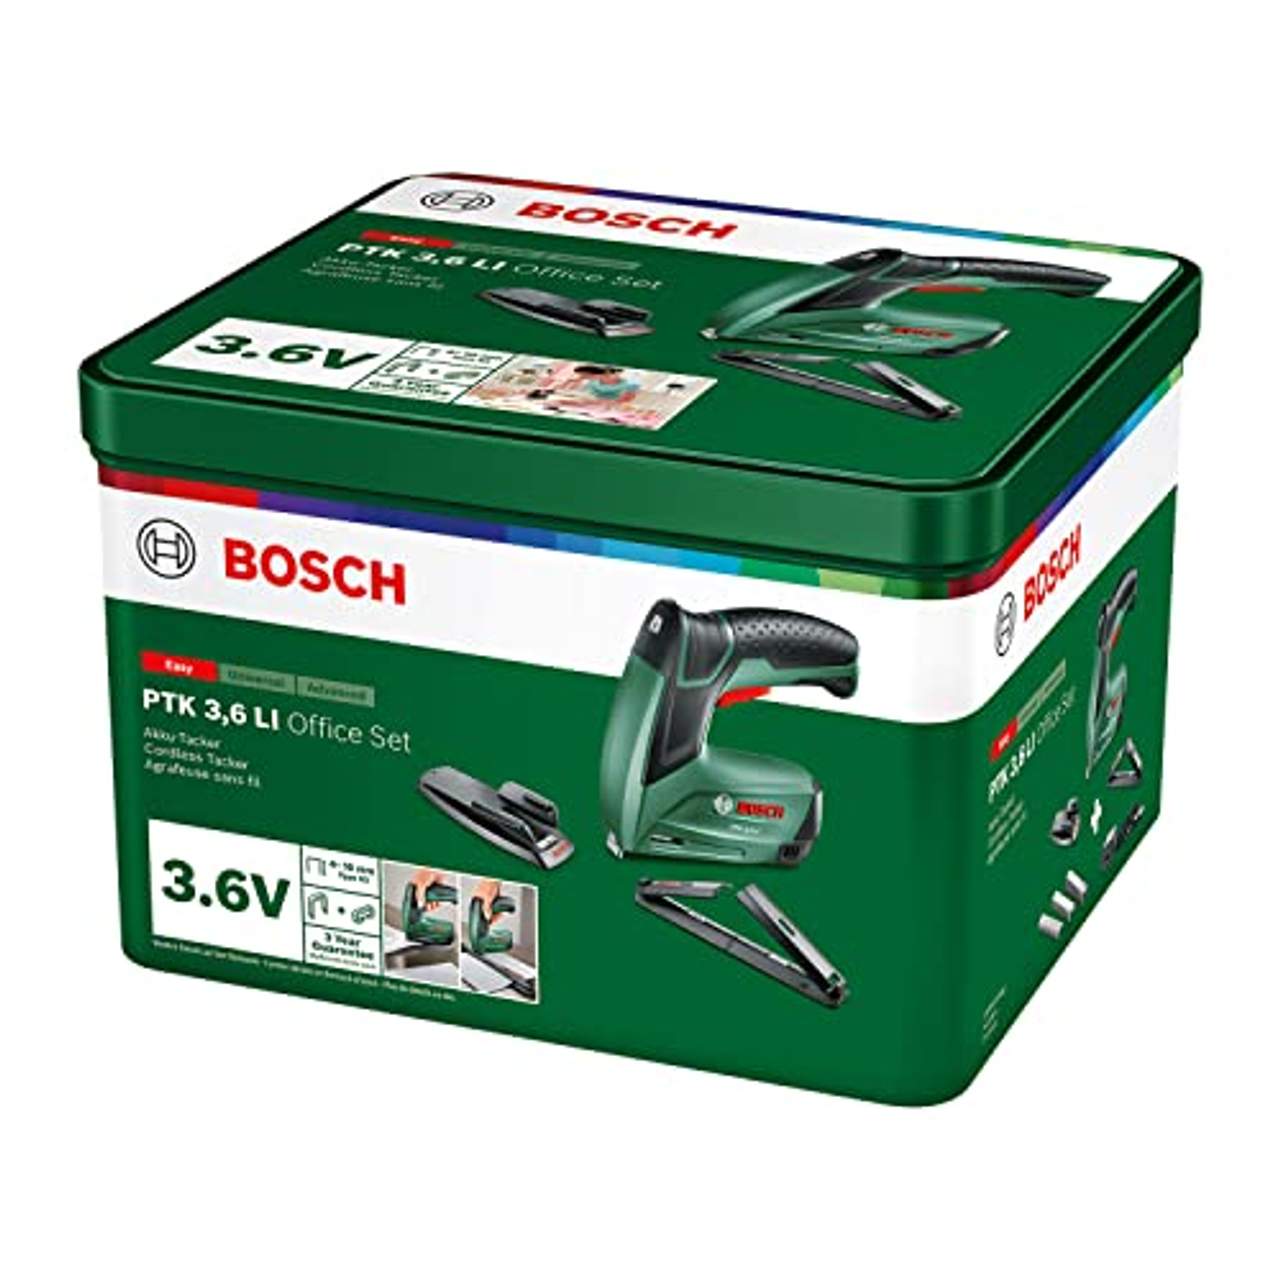 Bosch Akku Tacker PTK 3,6 LI Office Set